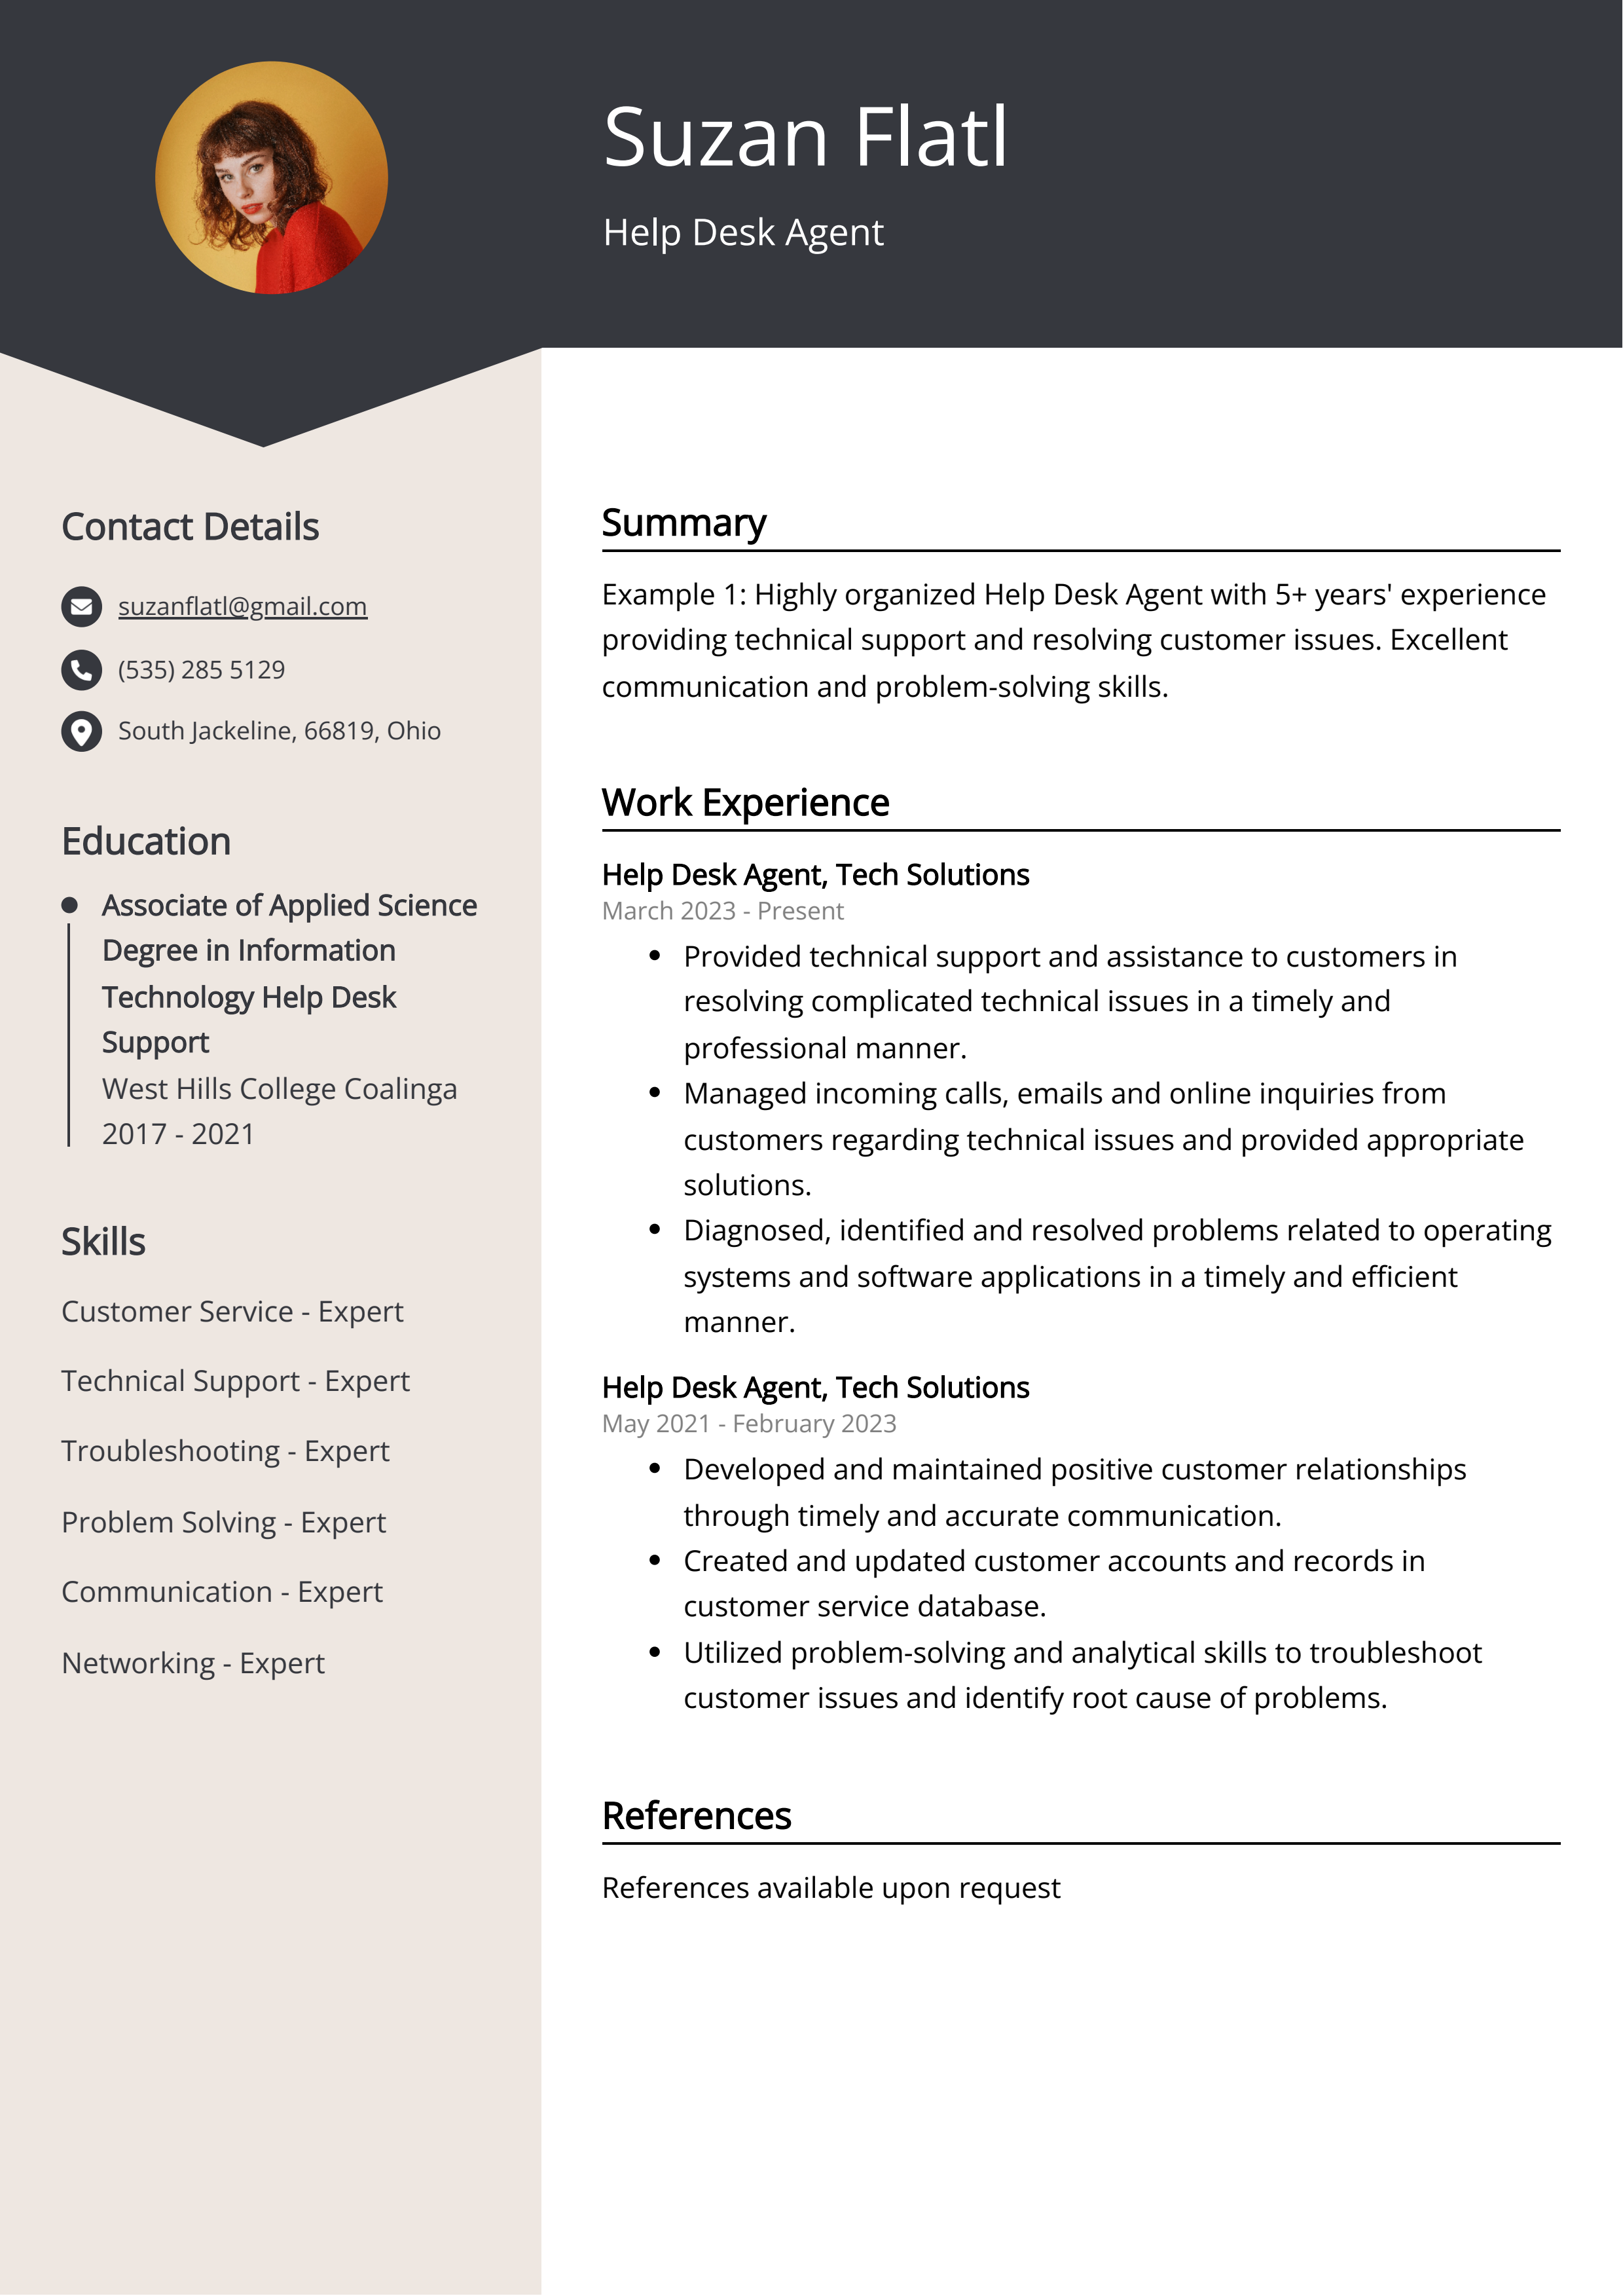 Help Desk Agent CV Example